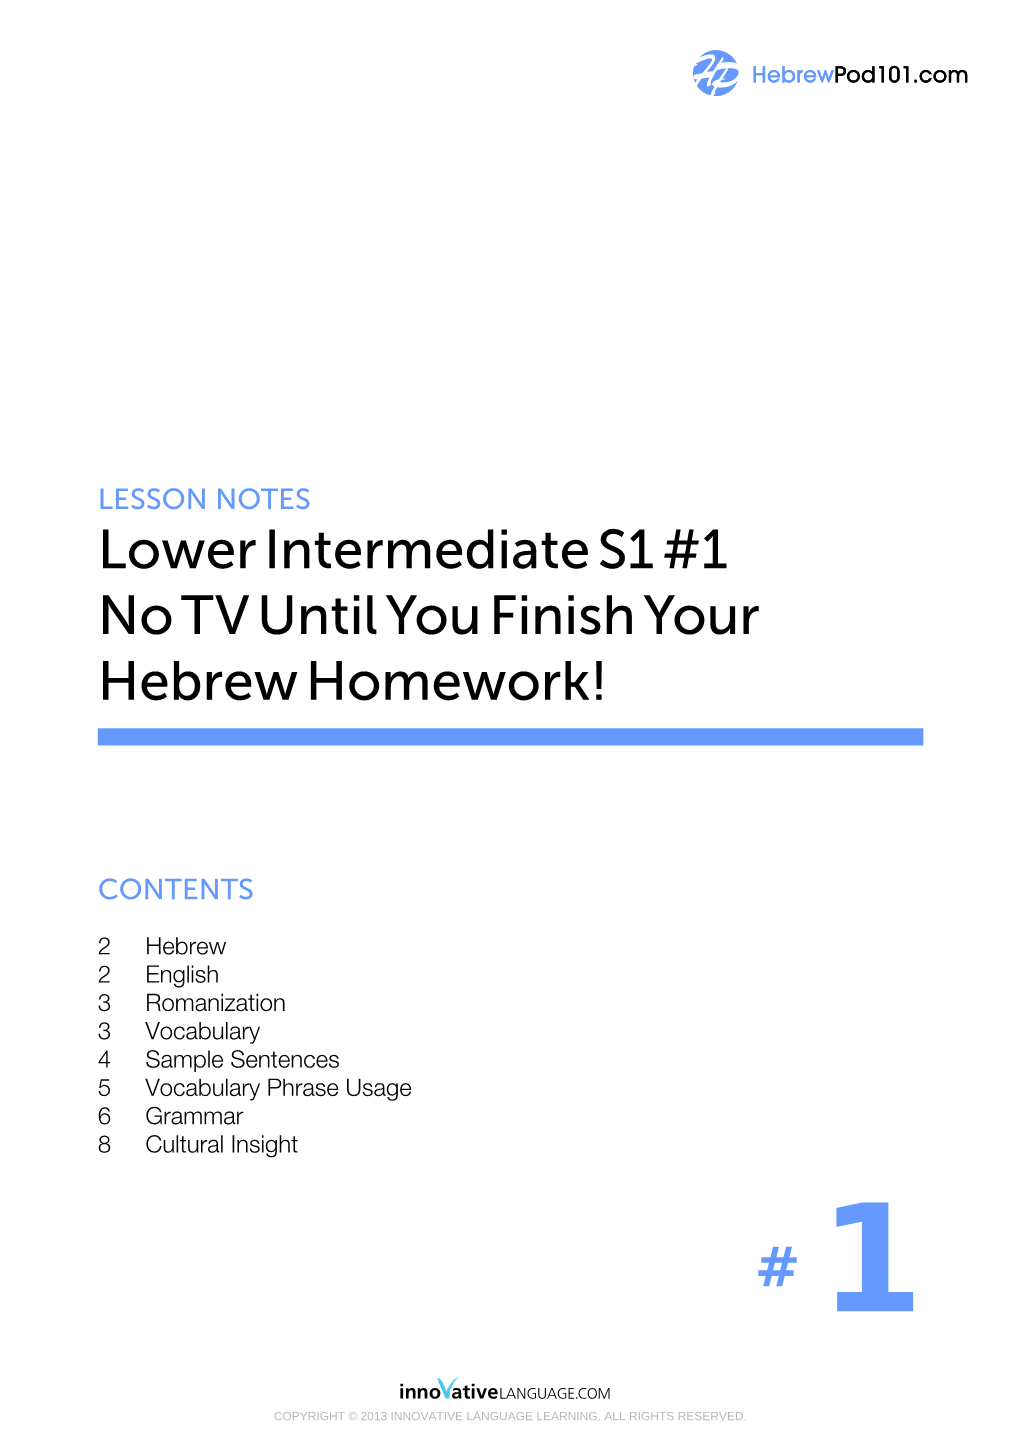 Lowerintermediates1#1 Notvuntilyoufinishyour Hebrewhomework!